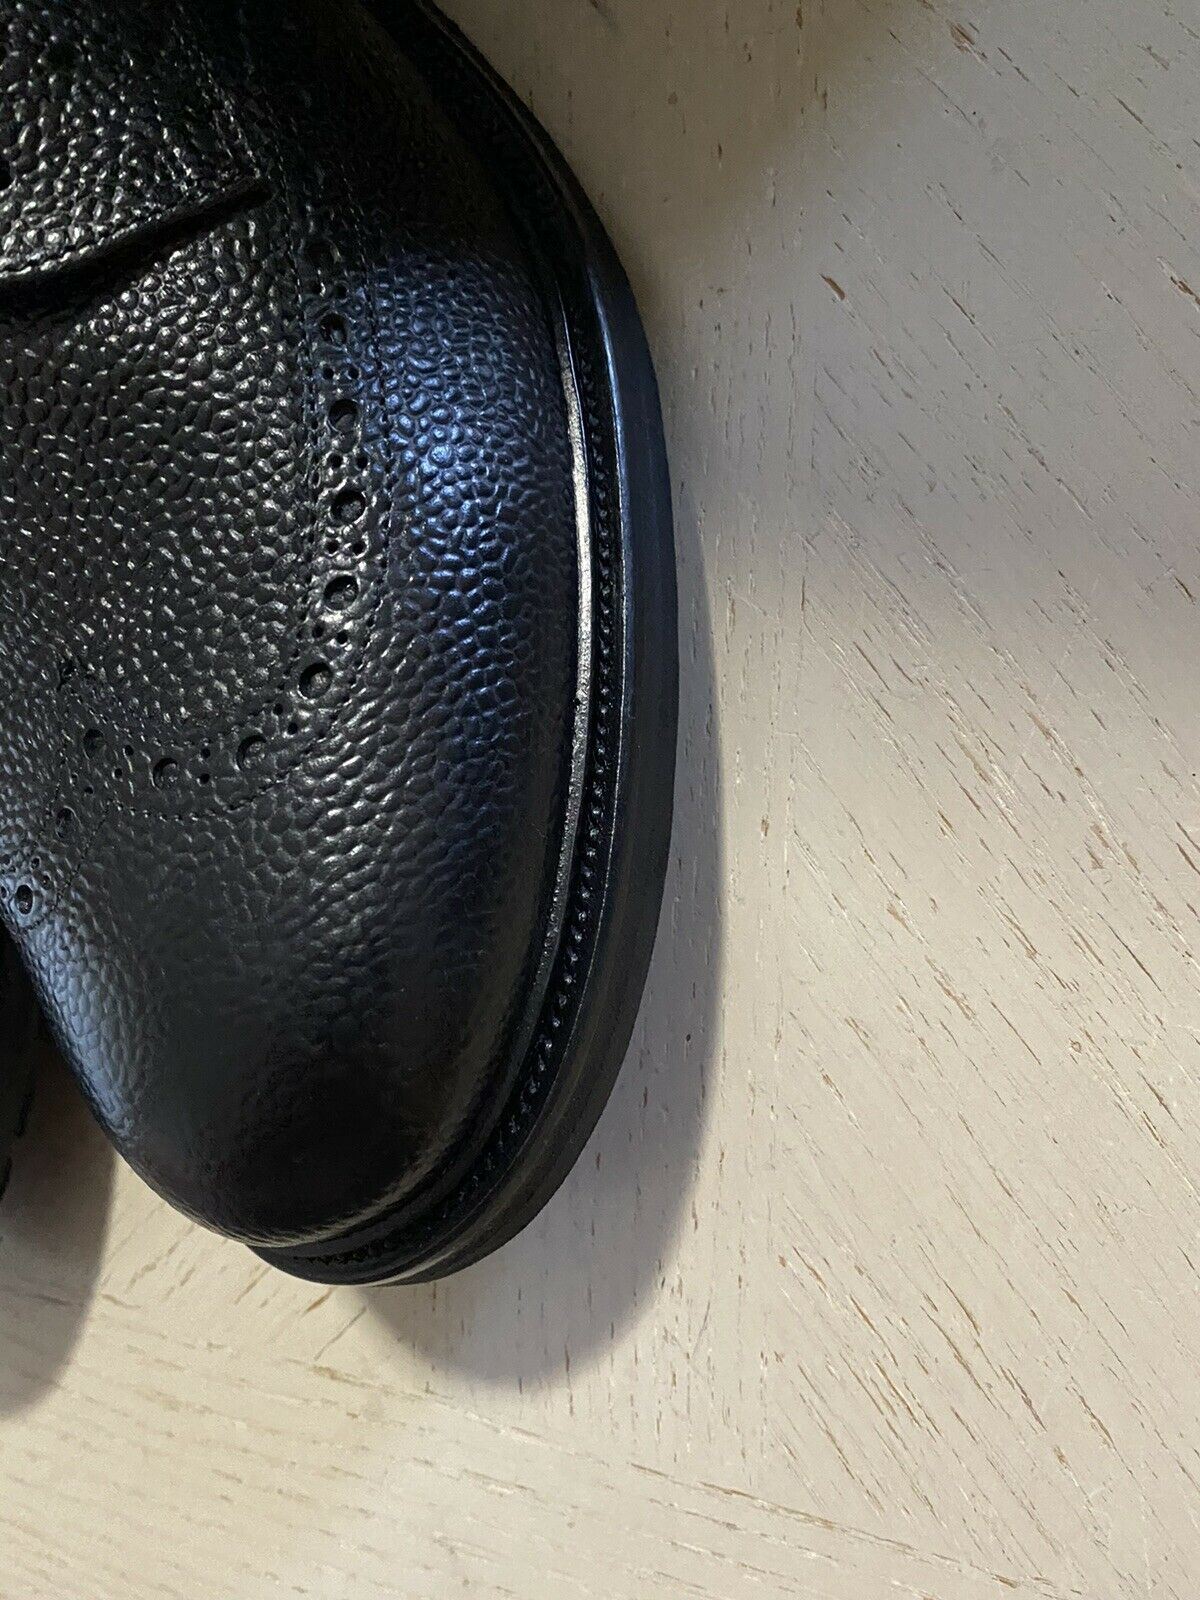 New $720 Roberto Cavalli Men’s Leather Boots Shoes Black 11.5 US/44.5 Eu Italy